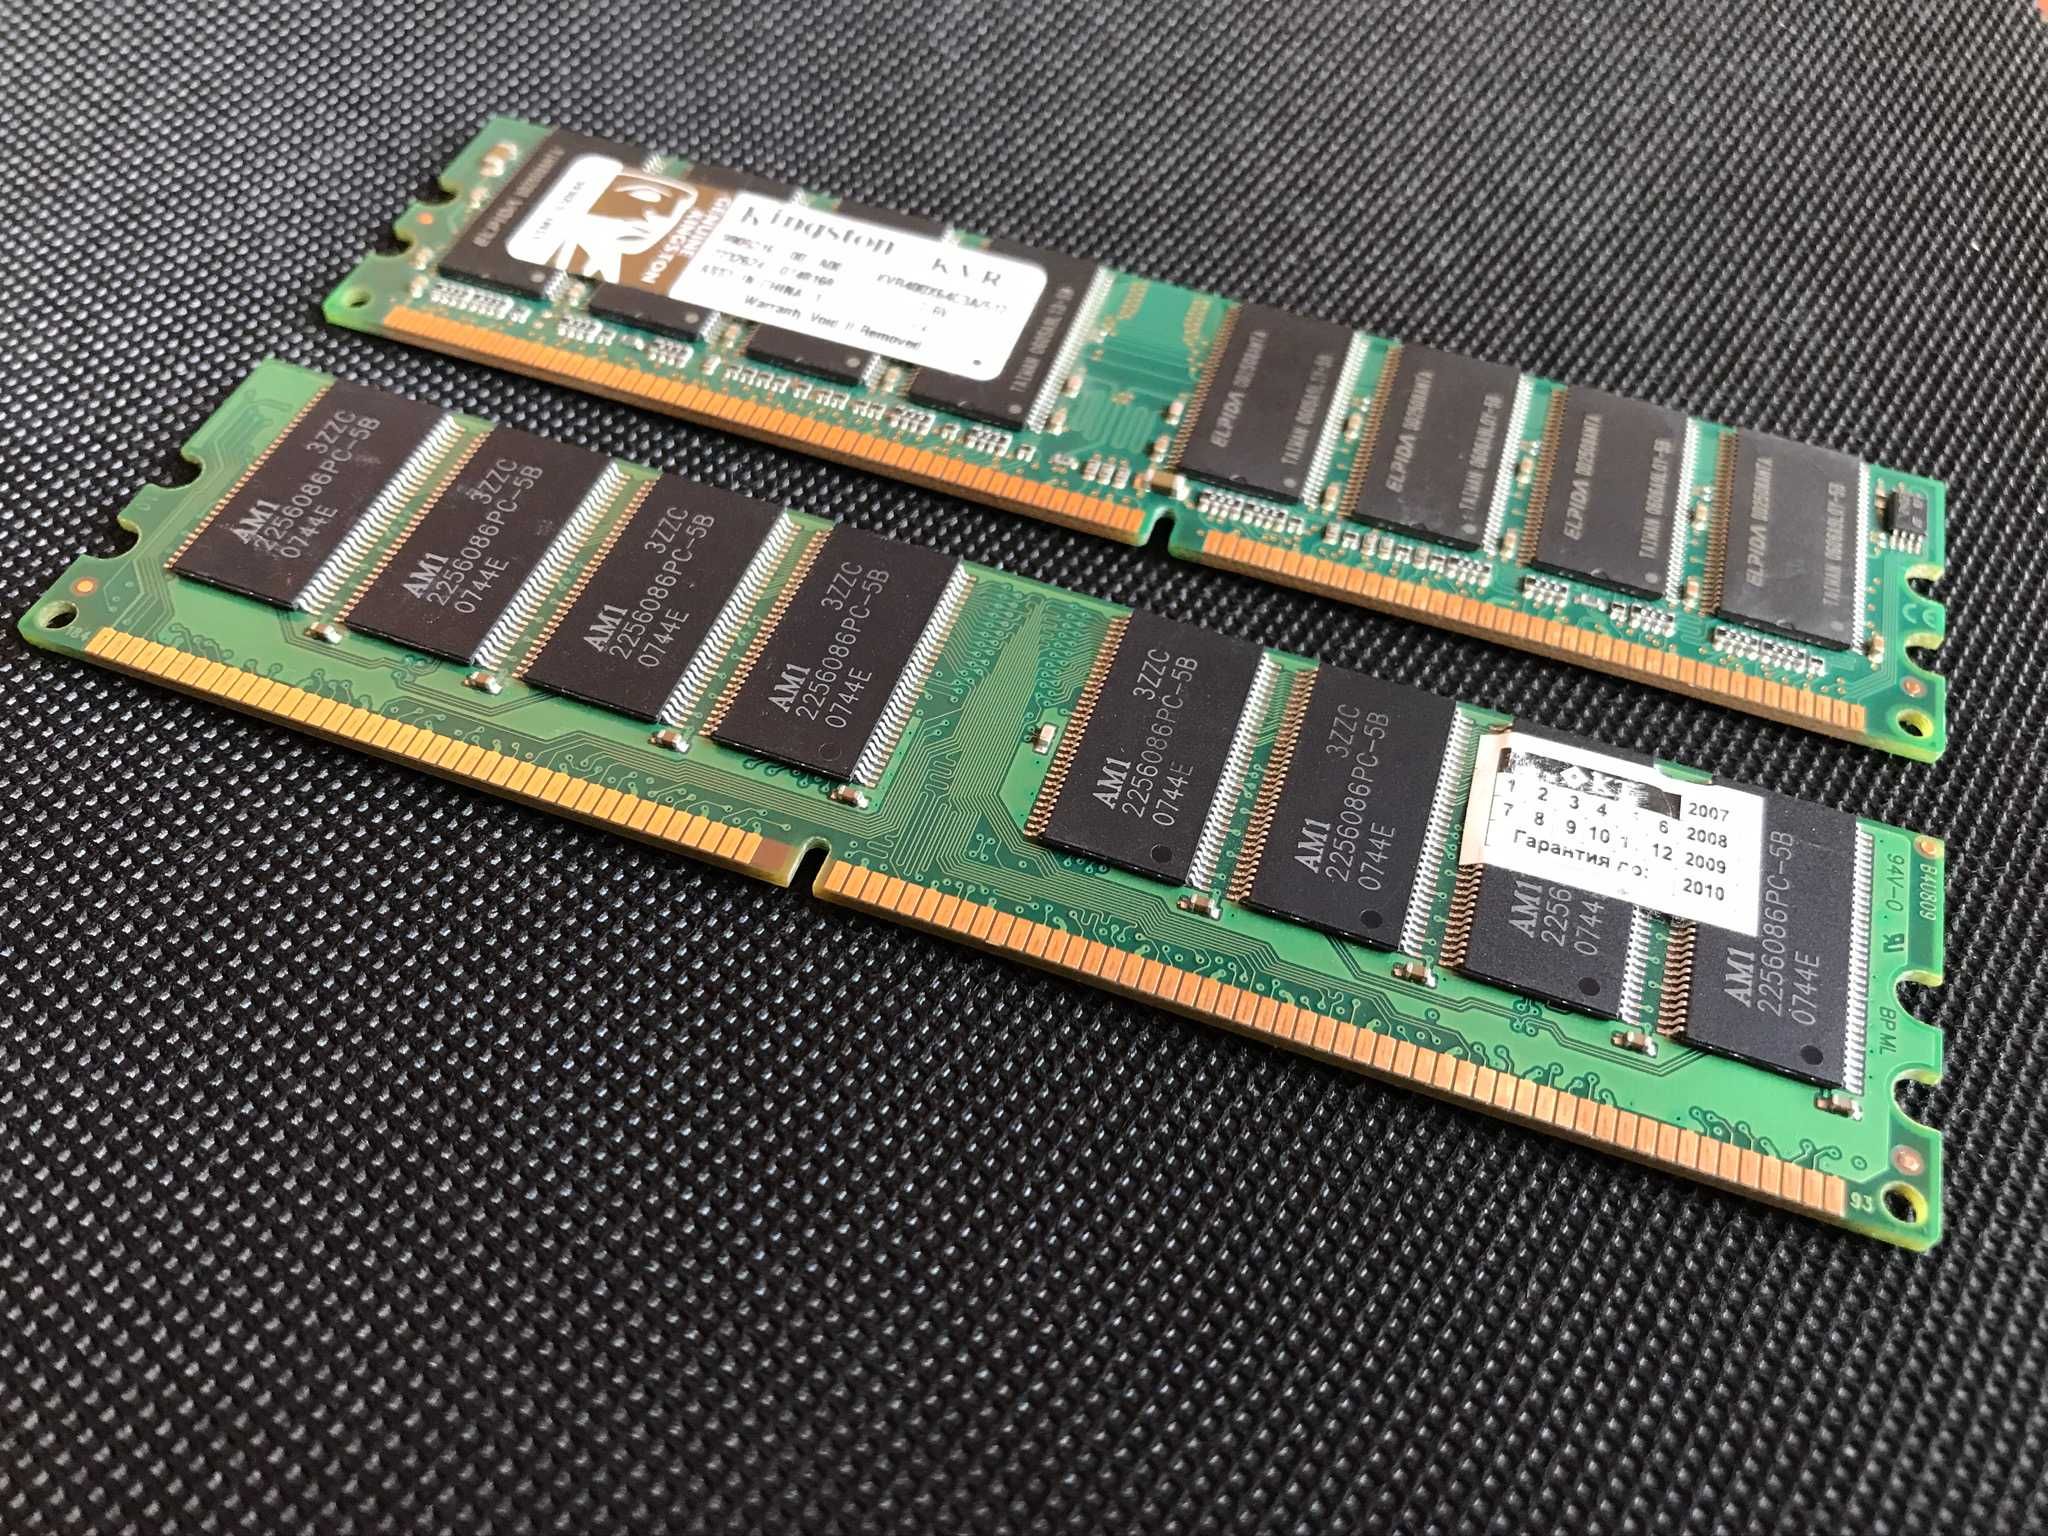 Оперативная память DDR(I) размером 512МБ